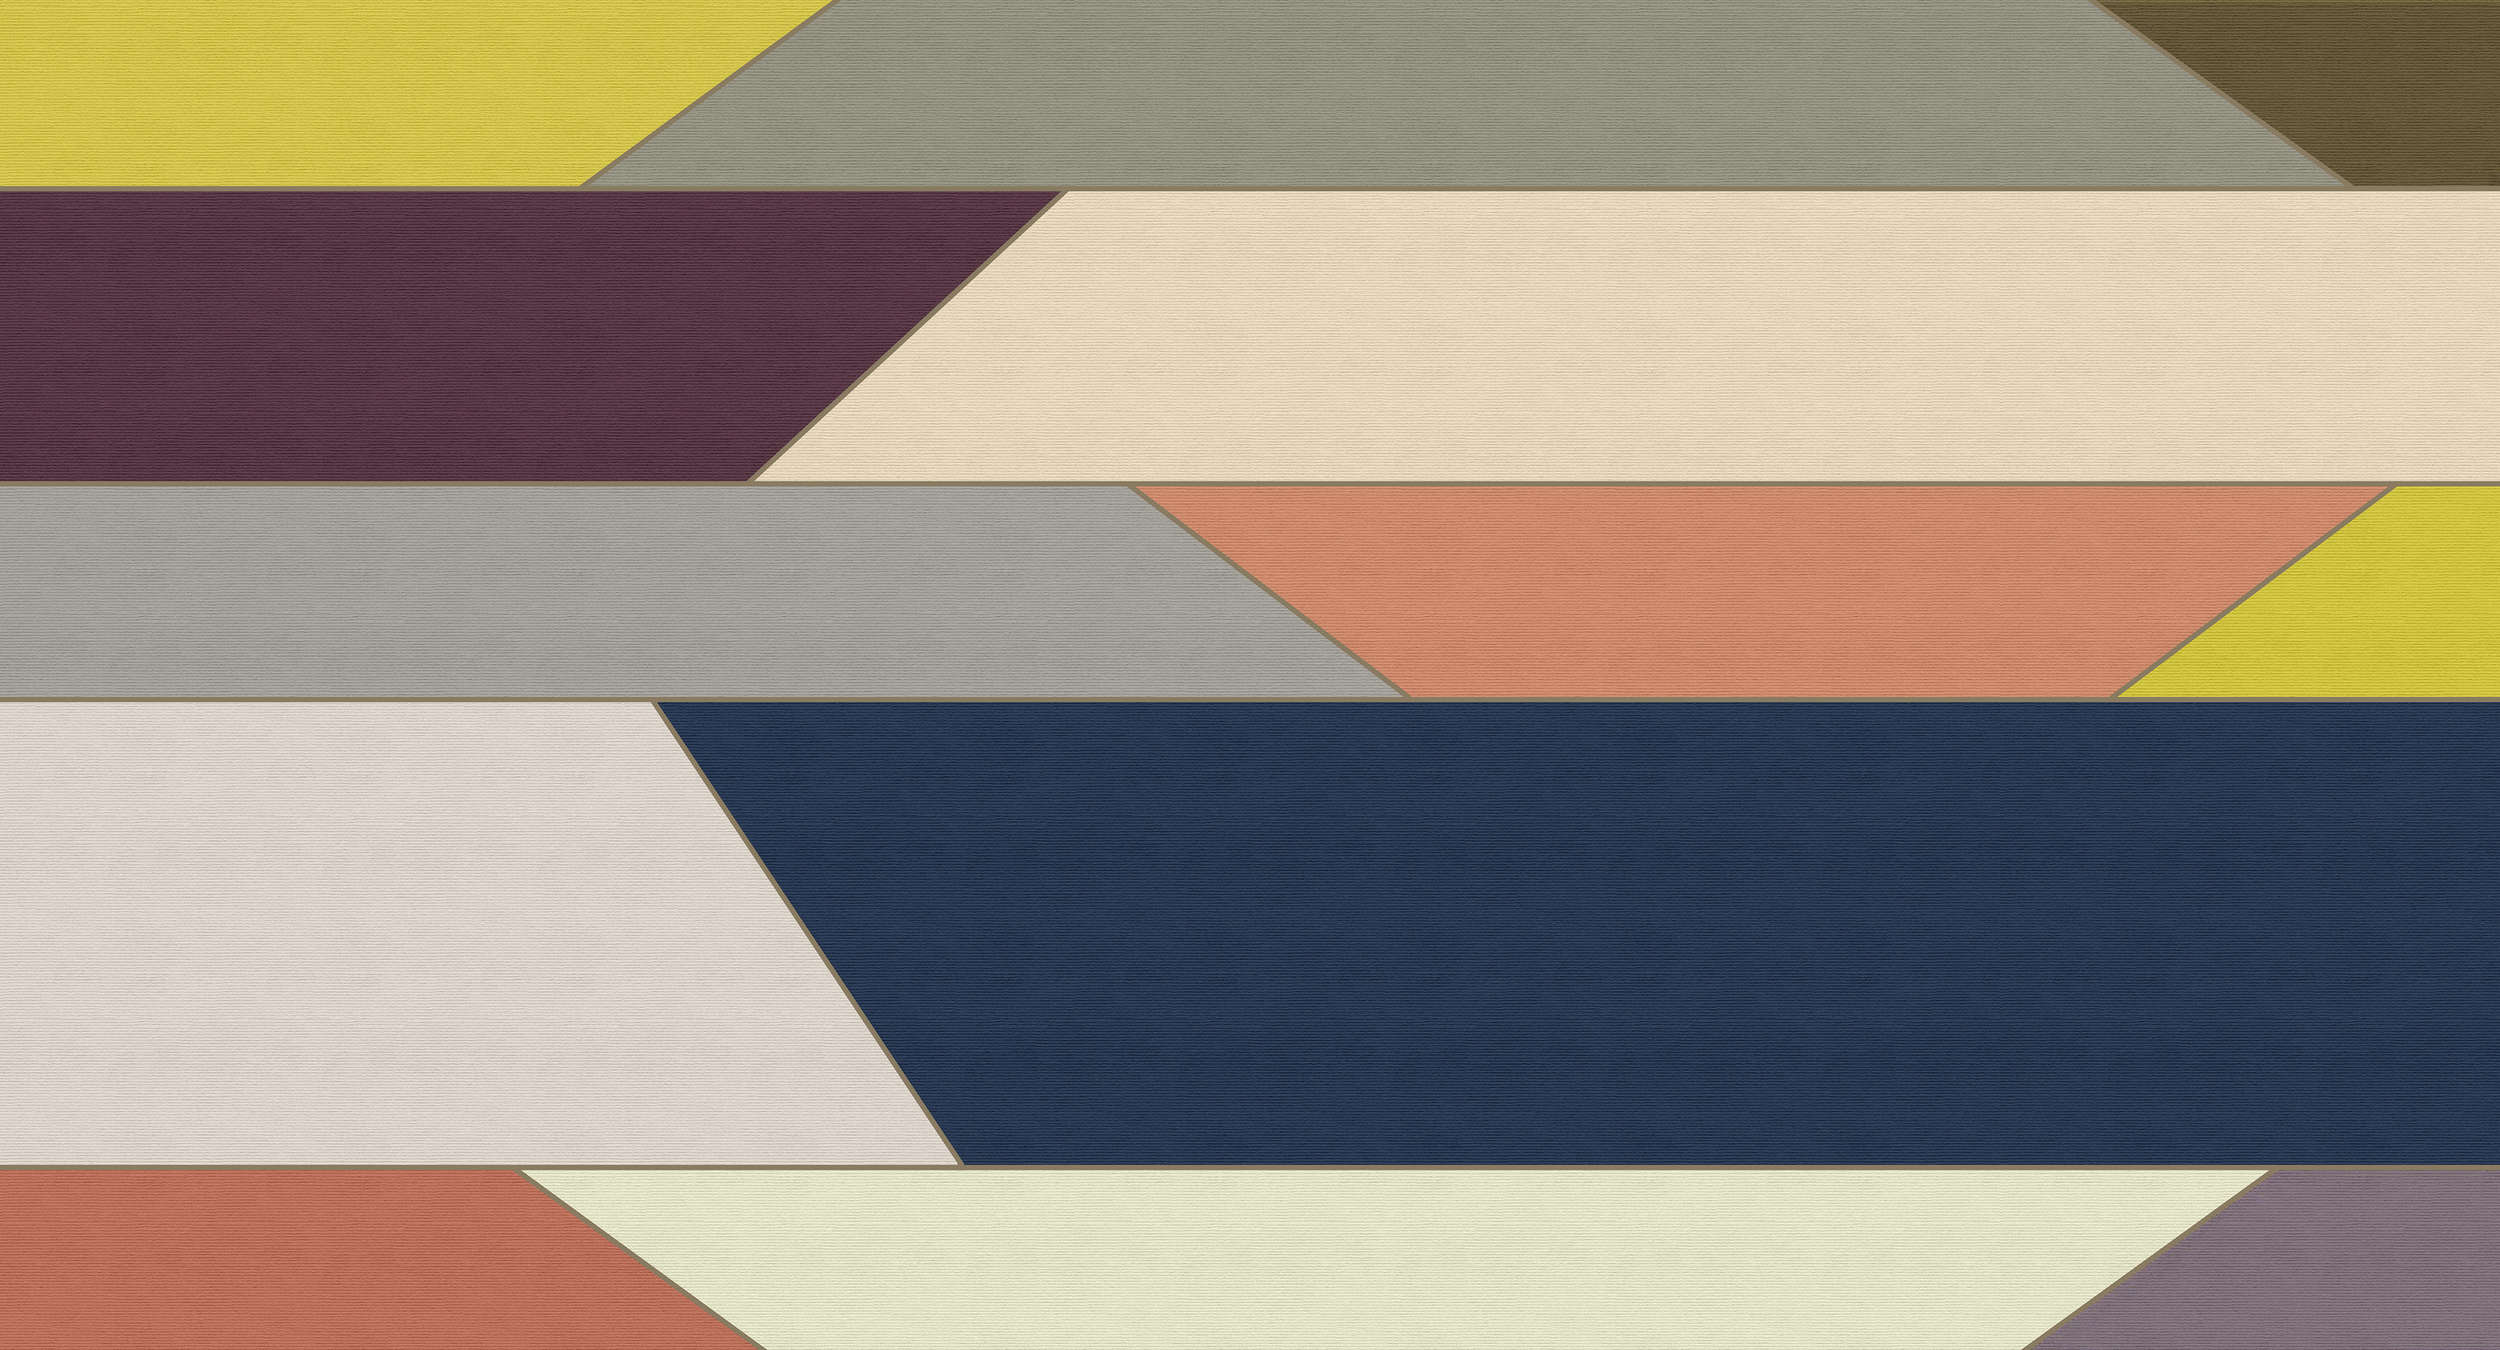             Geometría 1 - Fotomural con diseño de rayas horizontales de colores - estructura acanalada - Beige, Azul | Lana lisa mate
        